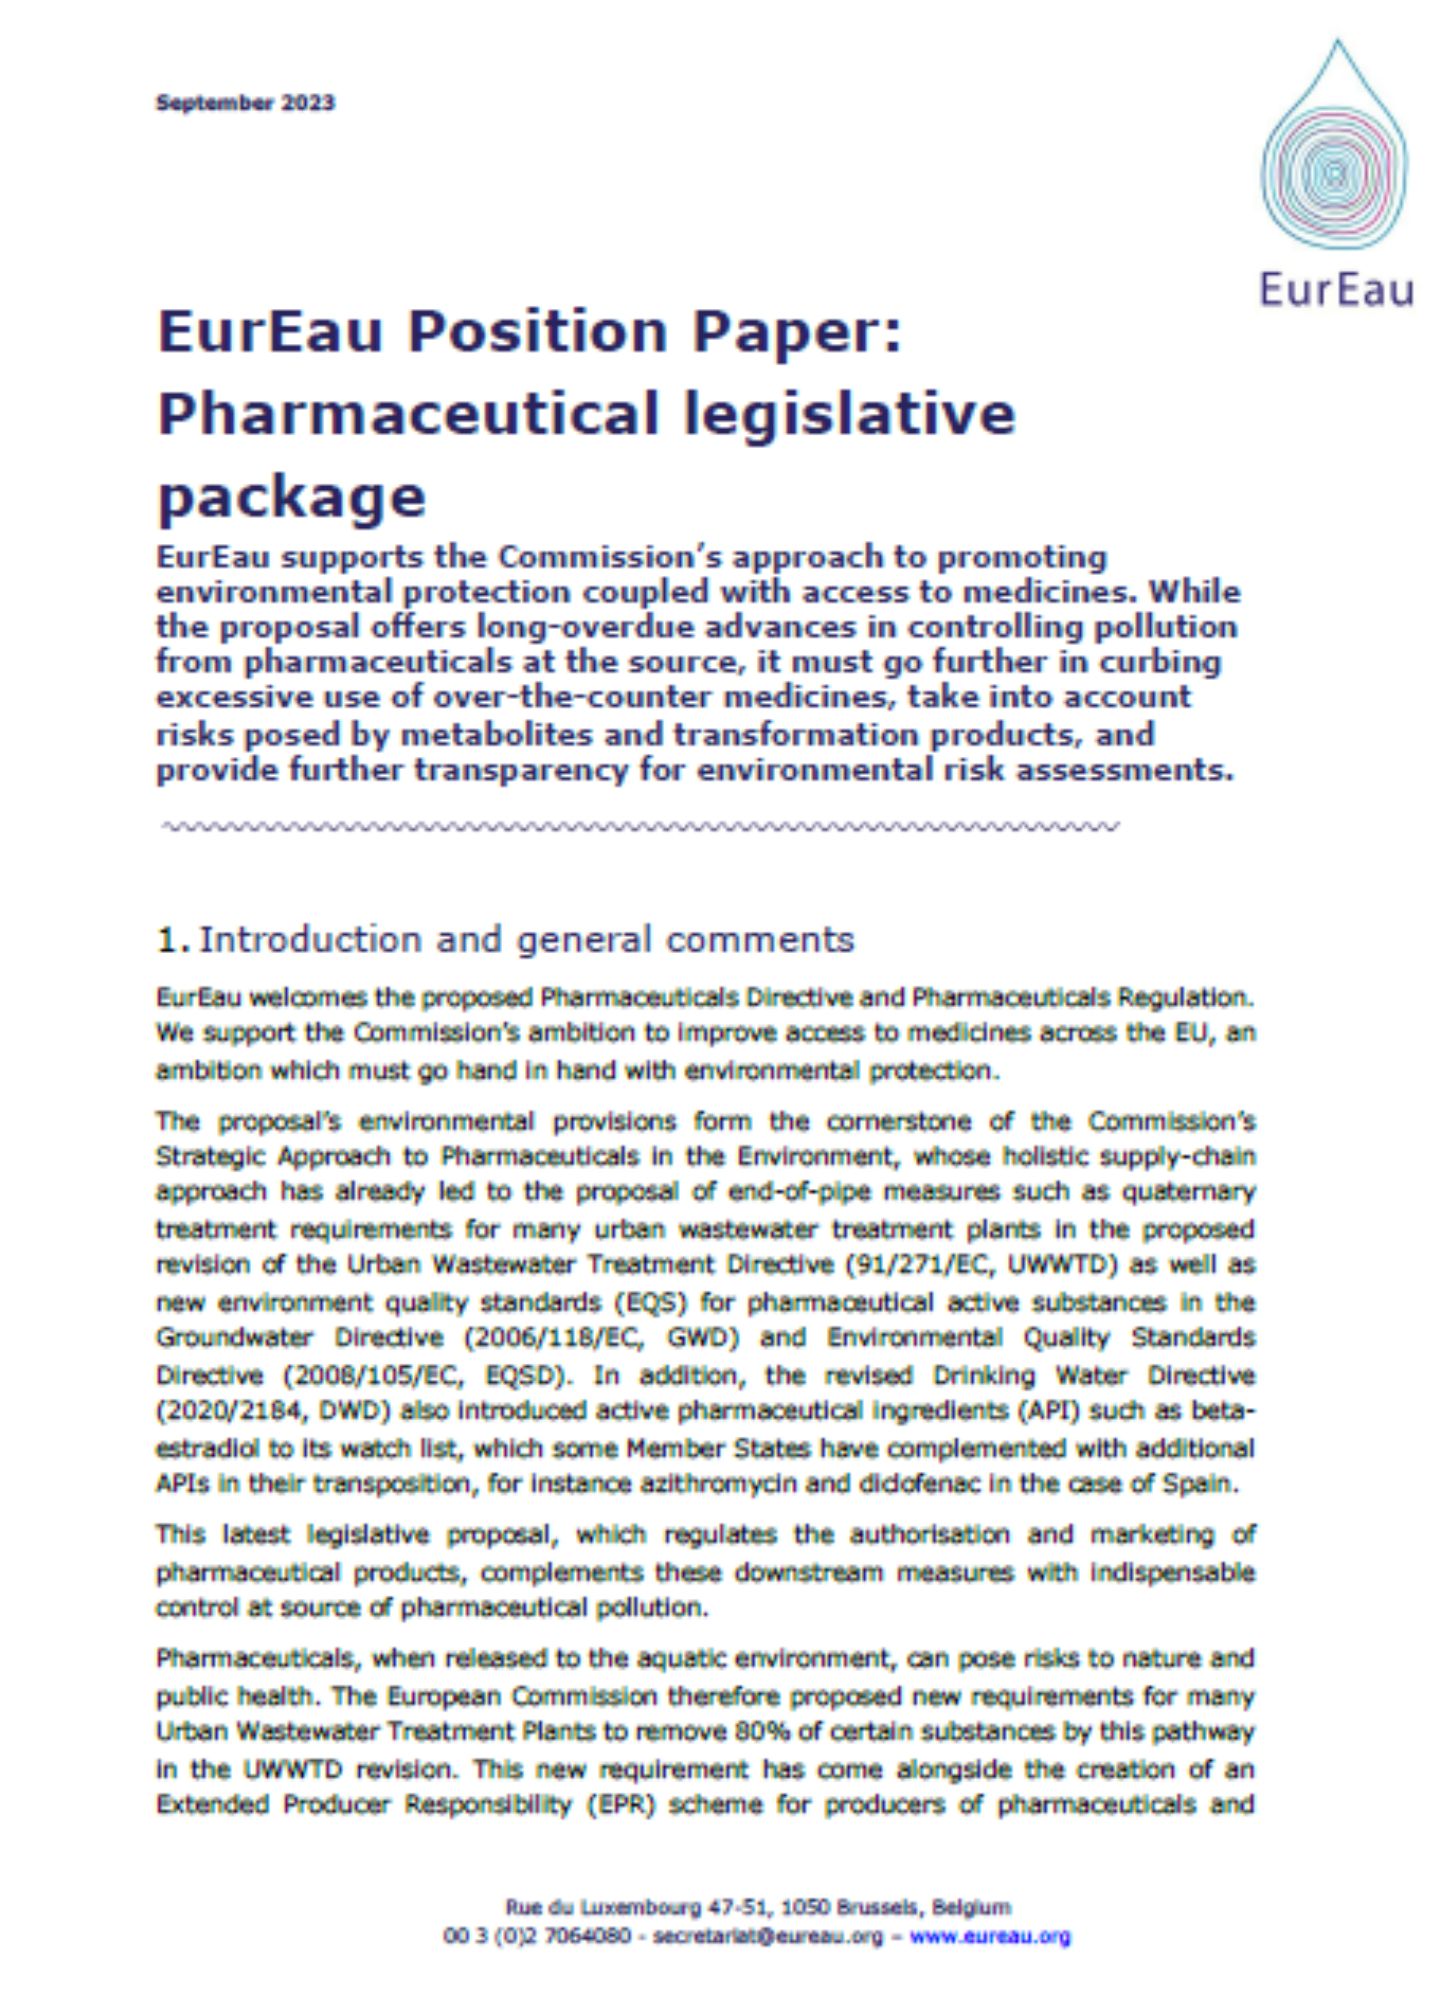 EurEau Position Paper on the Pharmaceuticals Legislative Package